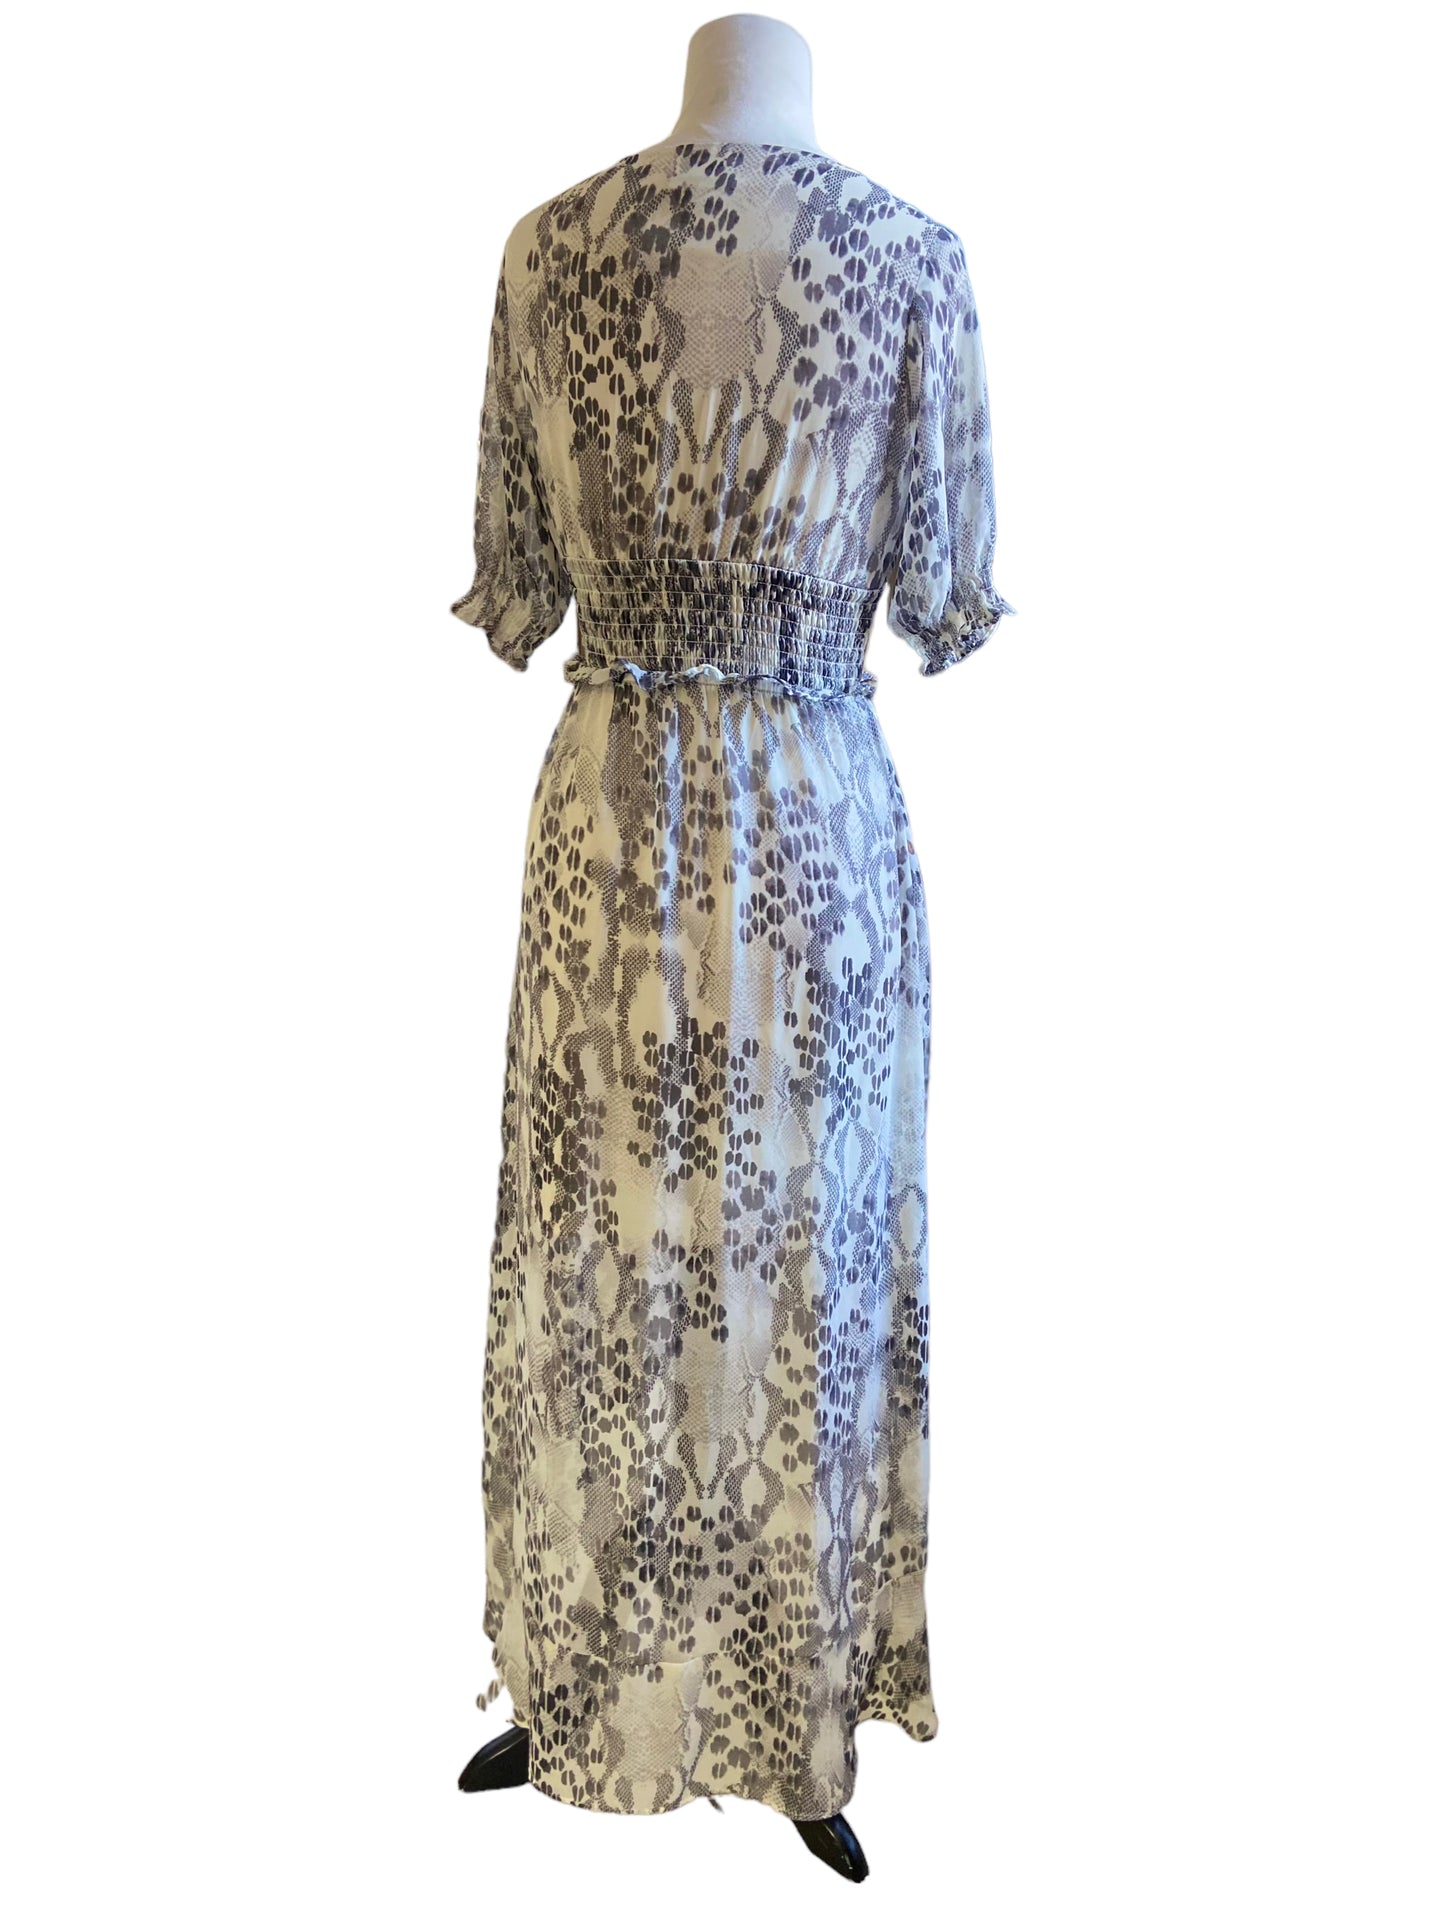 NWT Express Snakeskin Print Dress (Size XS)